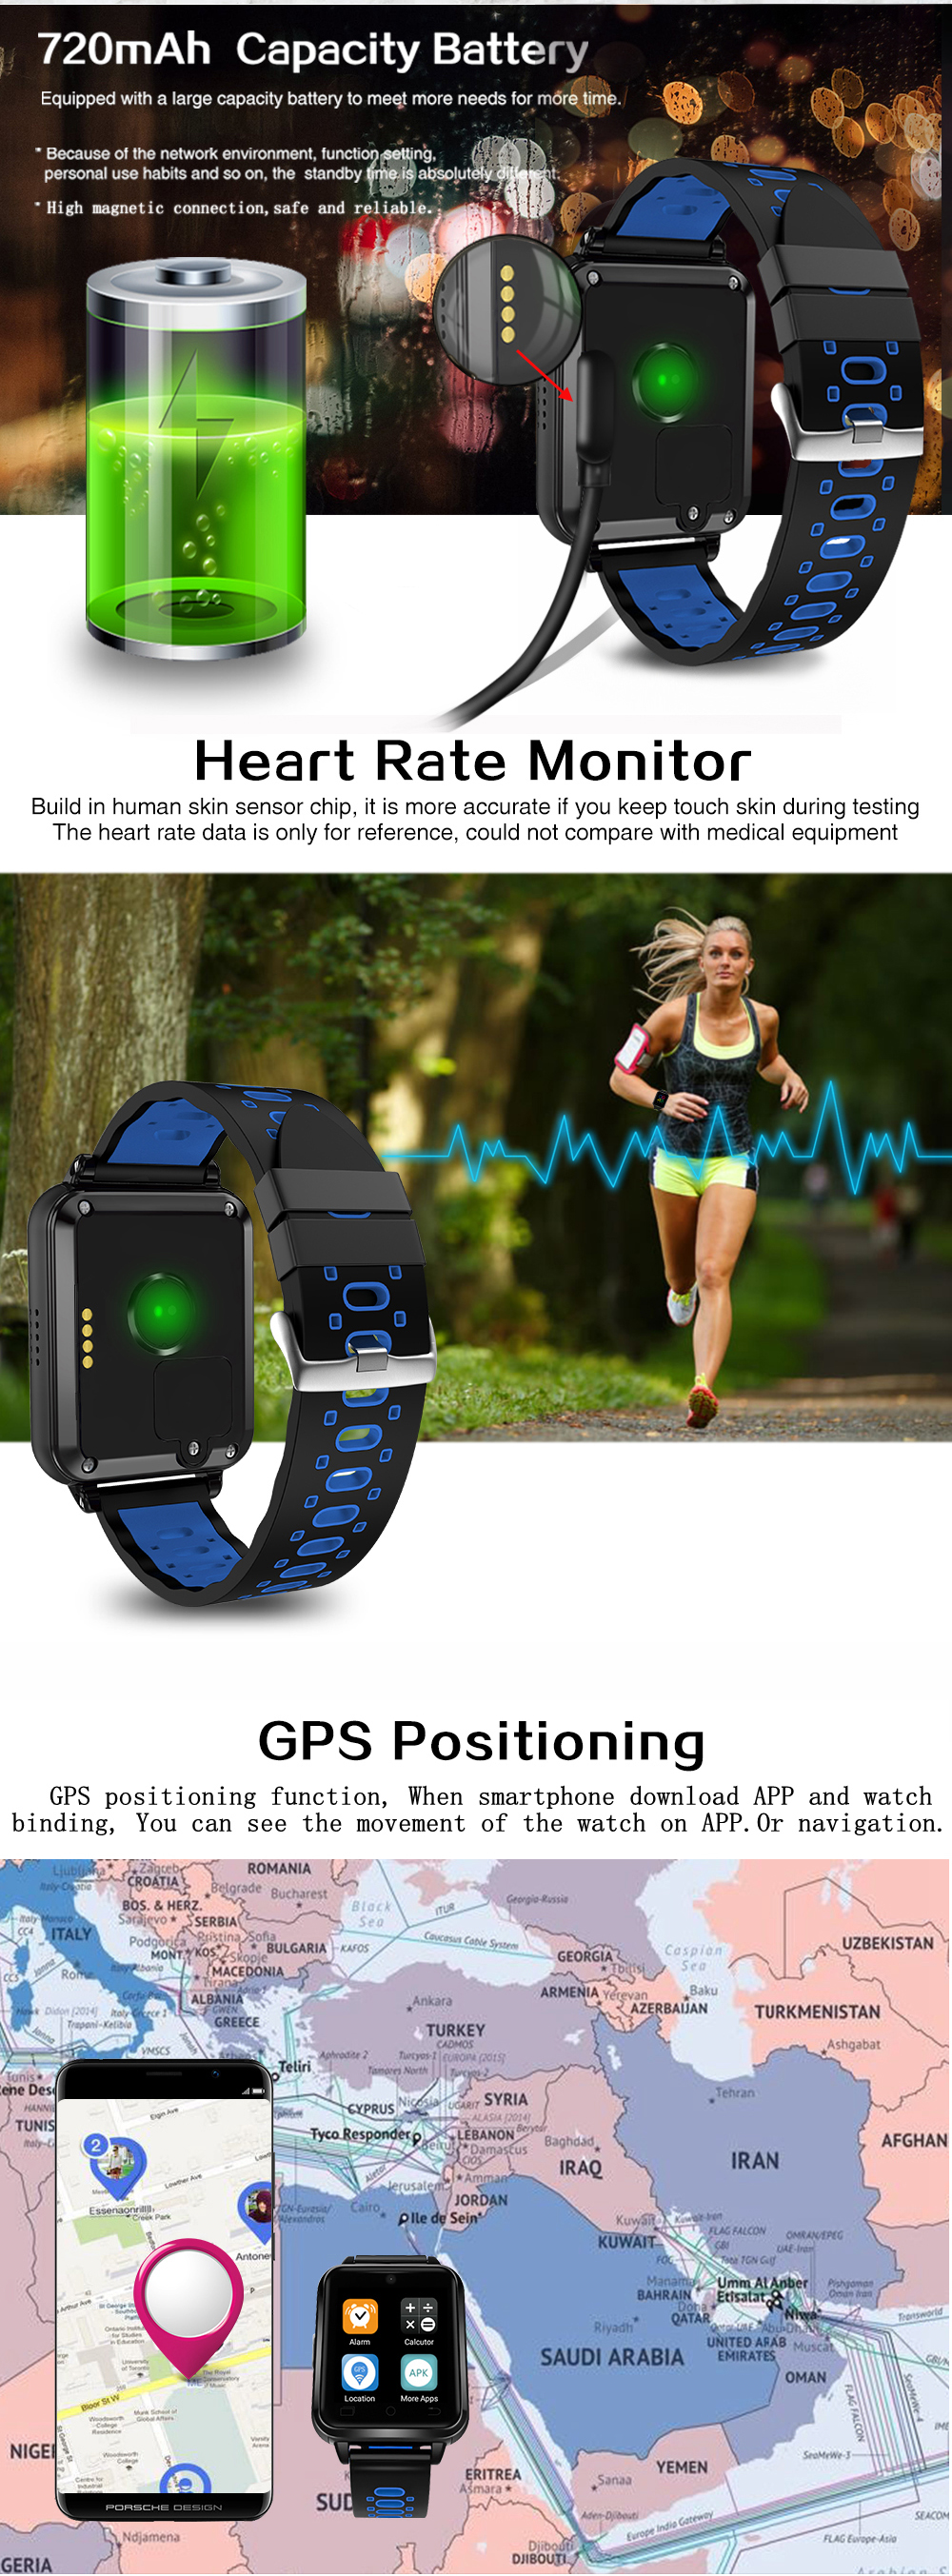 FINOW Q2 4G 1+16G GPS WIFI 2.0MP HD Camera Smart Watch Phone 1.54in Color Screen IP67 Waterproof Heart Rate Monitor Sports Fitness Bracelet 20